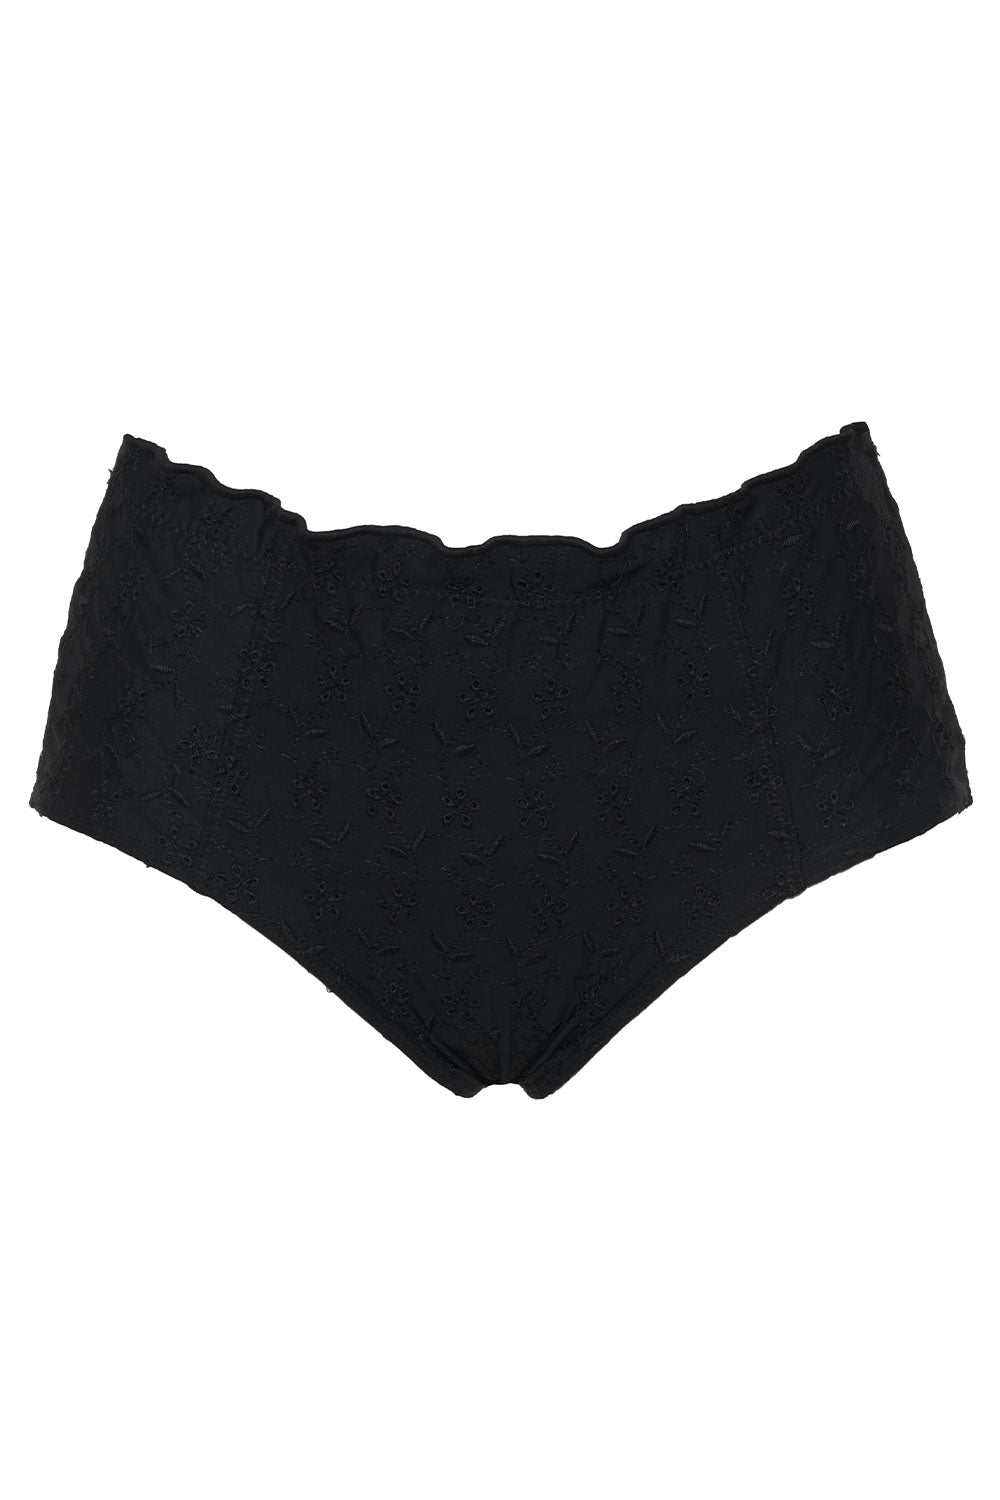 Lisa Eyelet Full Coverage Bikini Bottom - Black